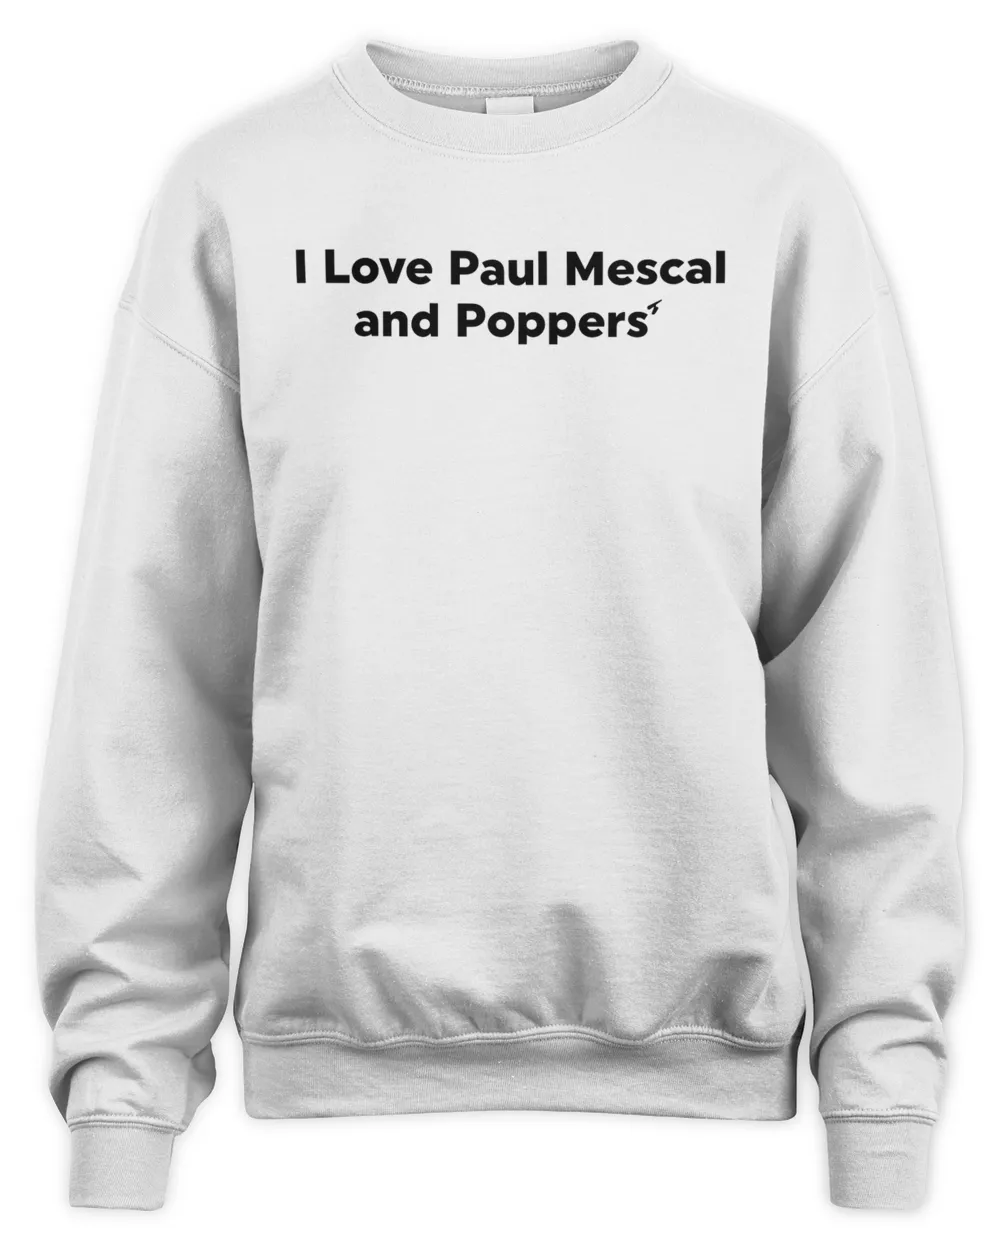 I Love Paul Mescal And Poppers' Tee Shirt Unisex Sweatshirt white 